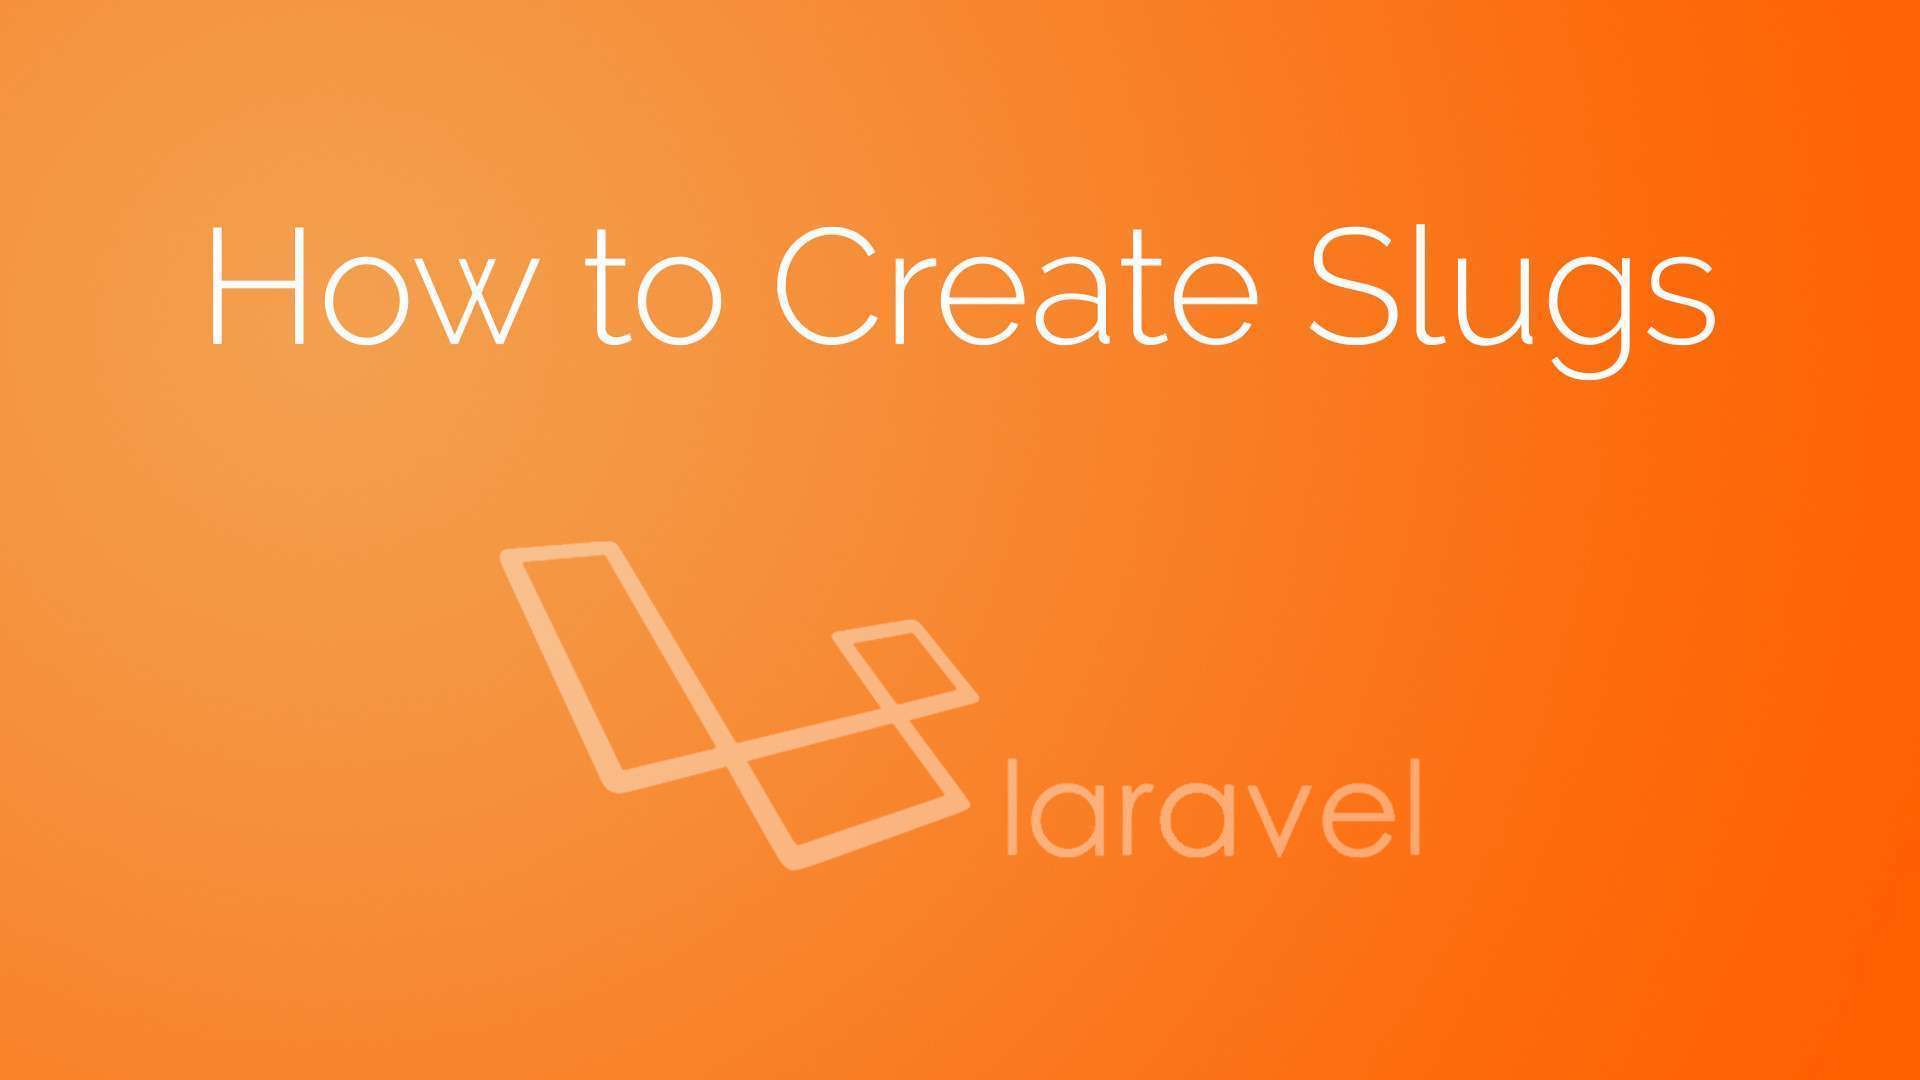 backup Offense slow Laravel Tutorials - How to Create Slugs in Laravel